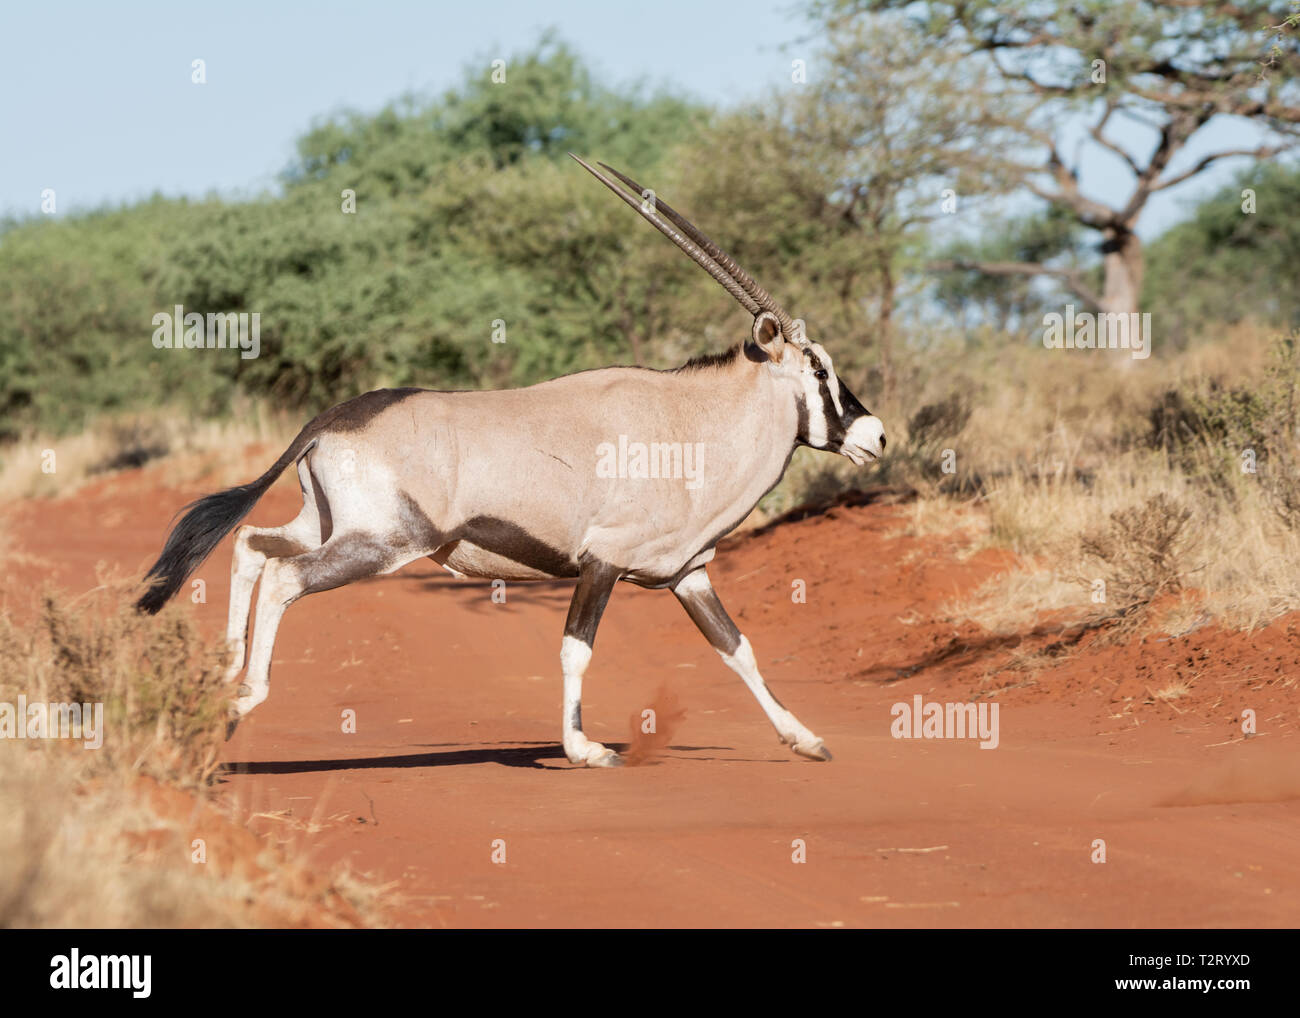 A Gemsbok antelope in Southern African savanna Stock Photo